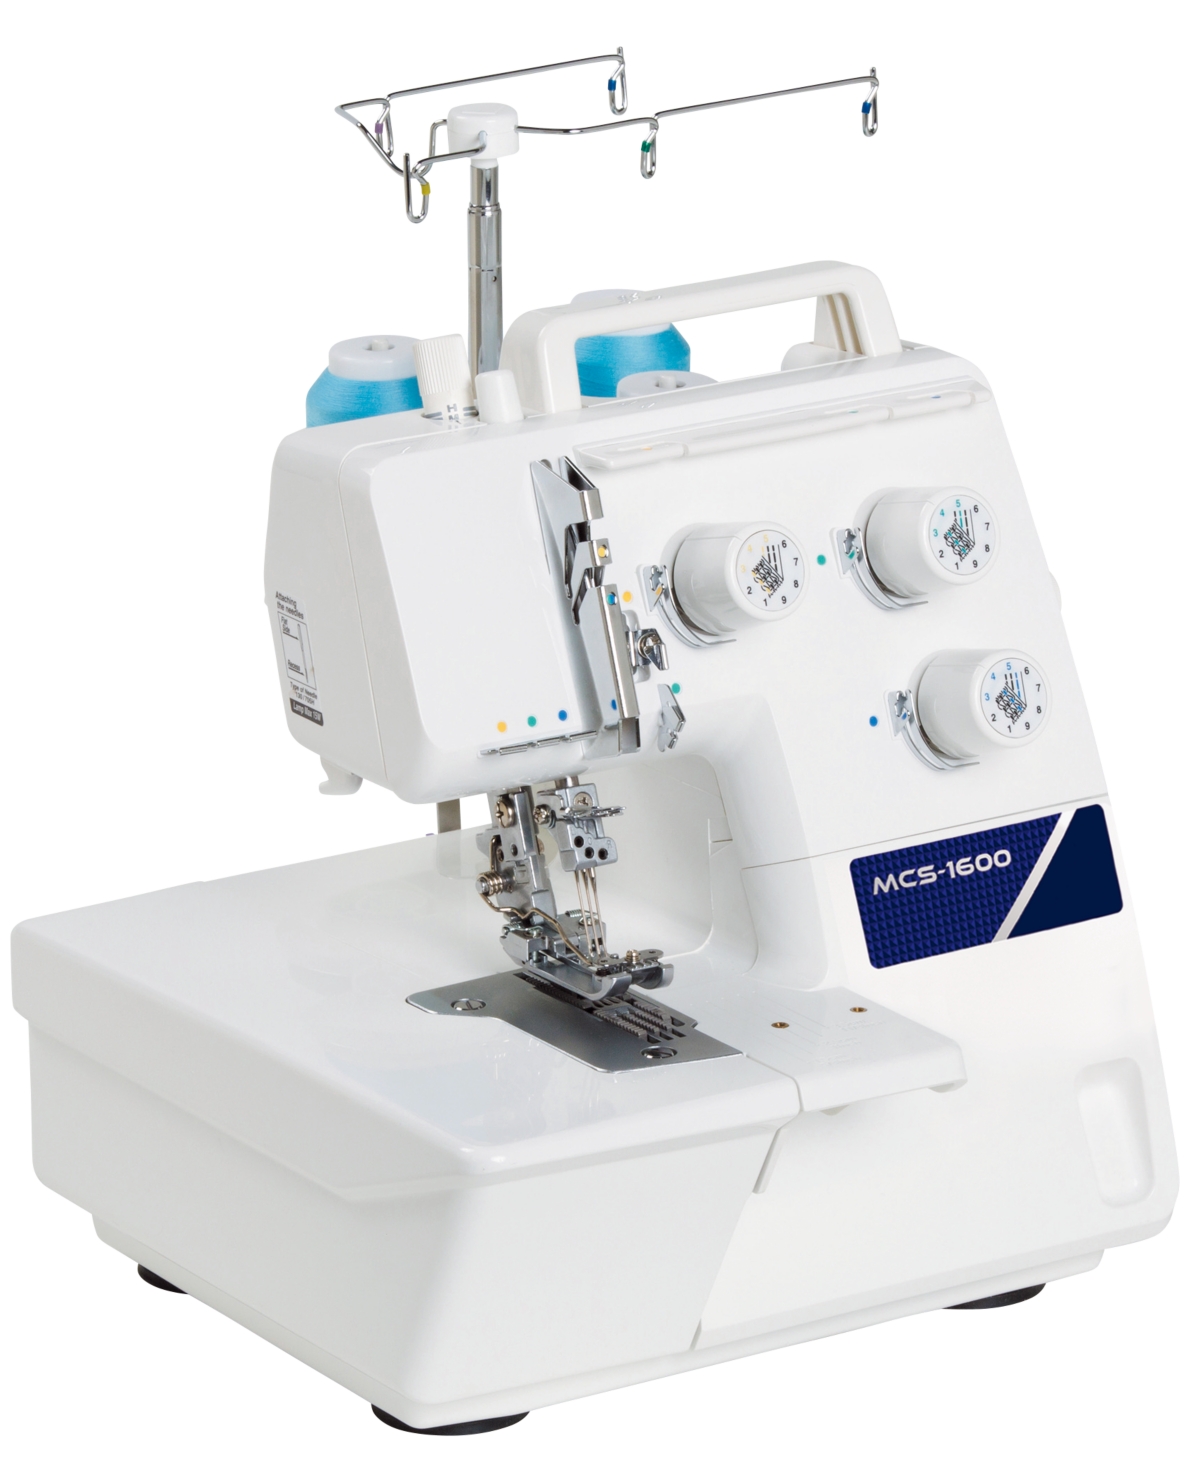 Mcs-1600 CoverStitch Sewing Machine - White